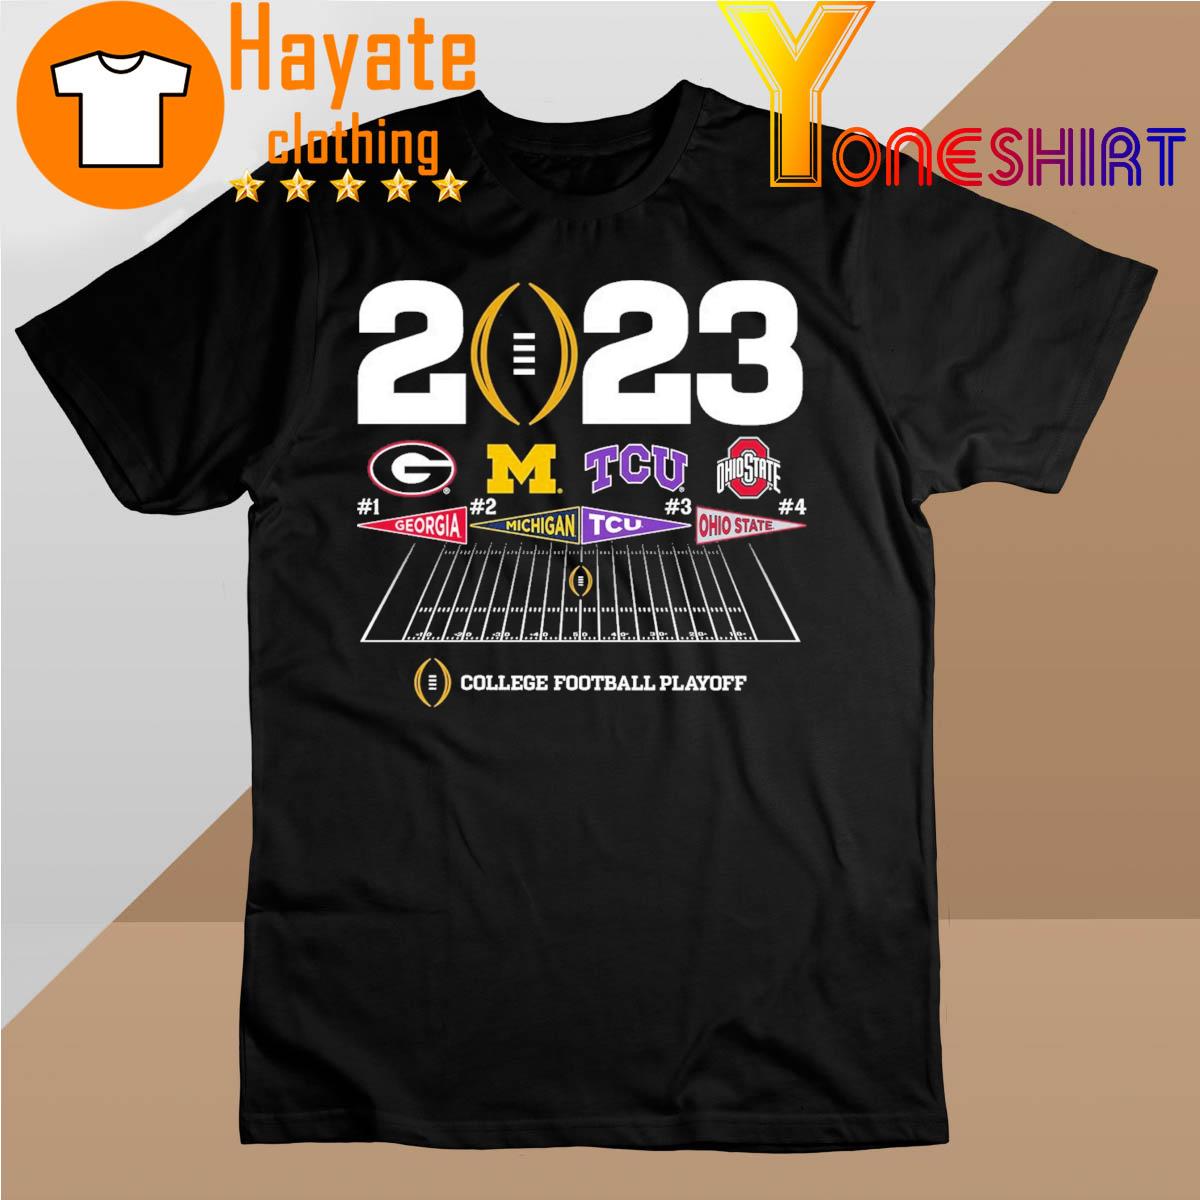 2023 College Football Playoff 4 Teams shirt